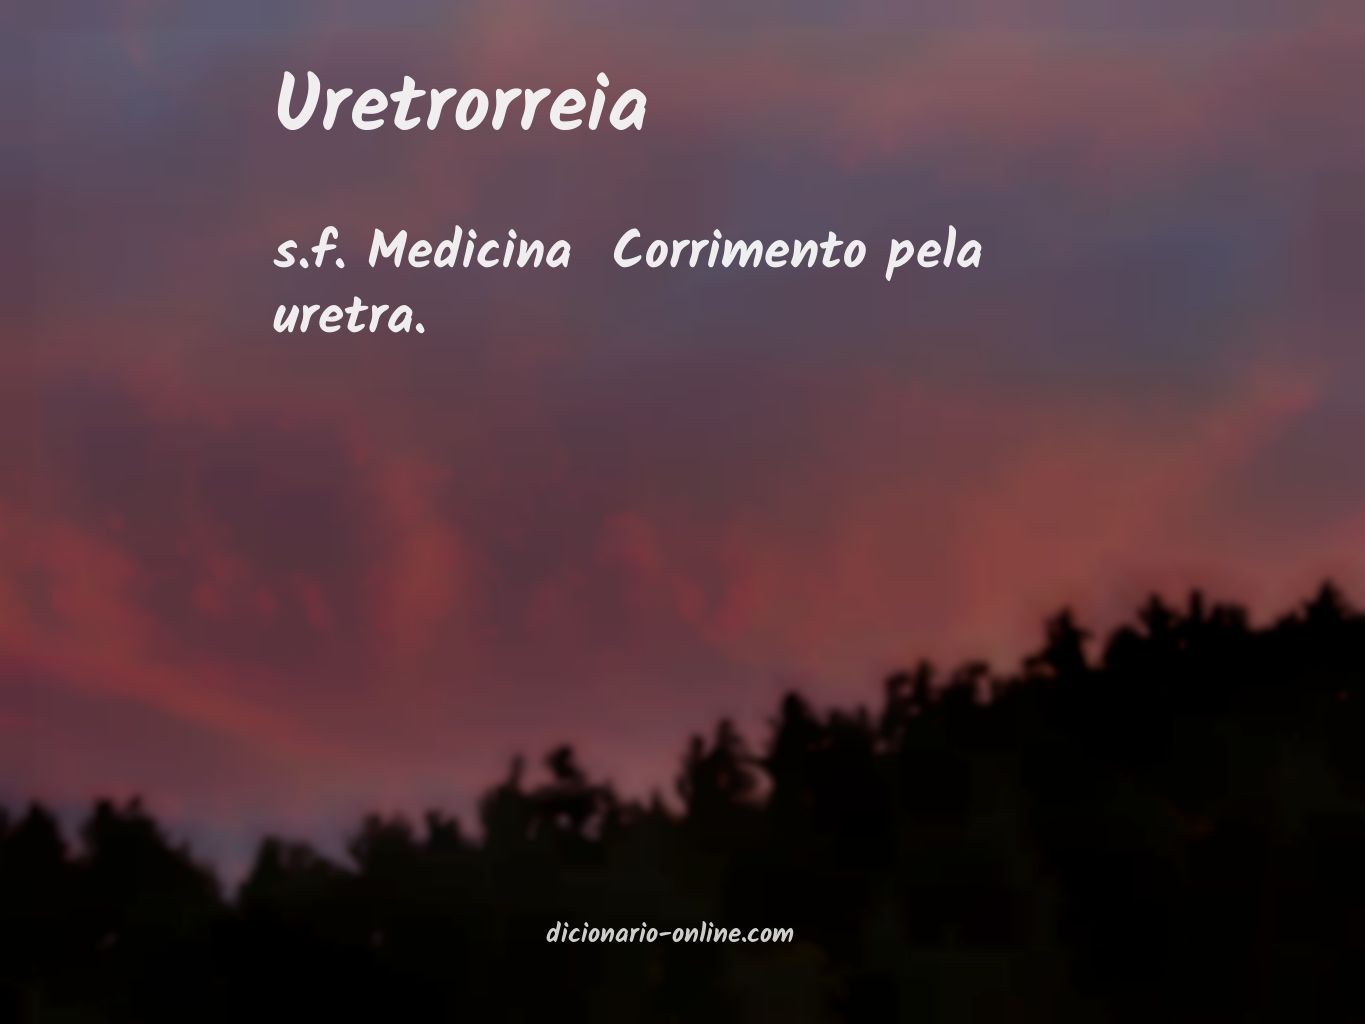 Significado de uretrorreia